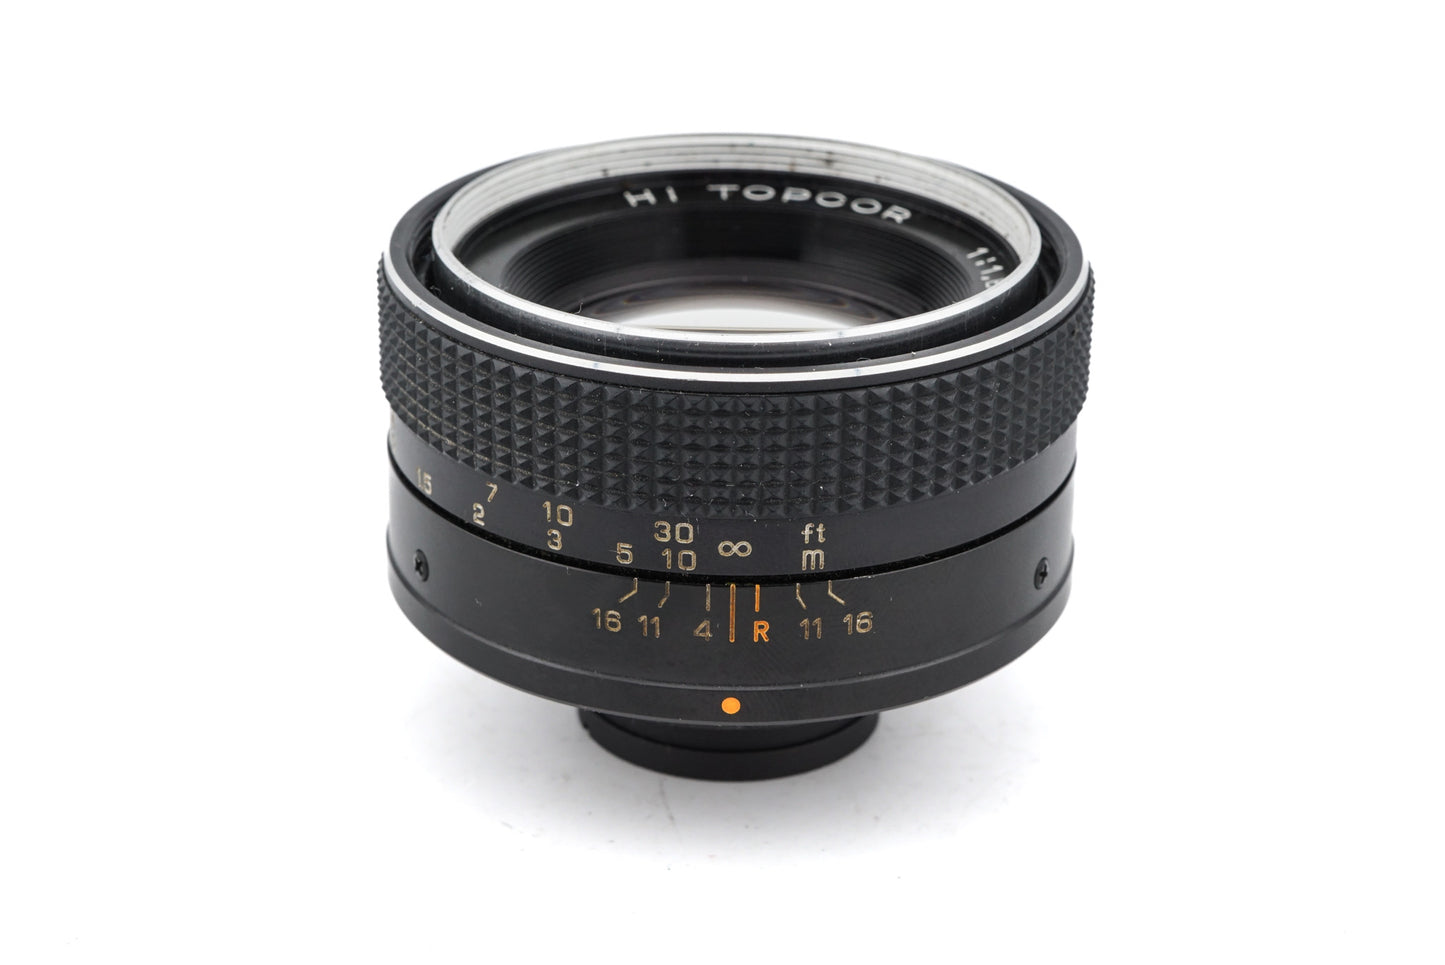 Topcon 55mm f1.8 HI Topcor - Lens